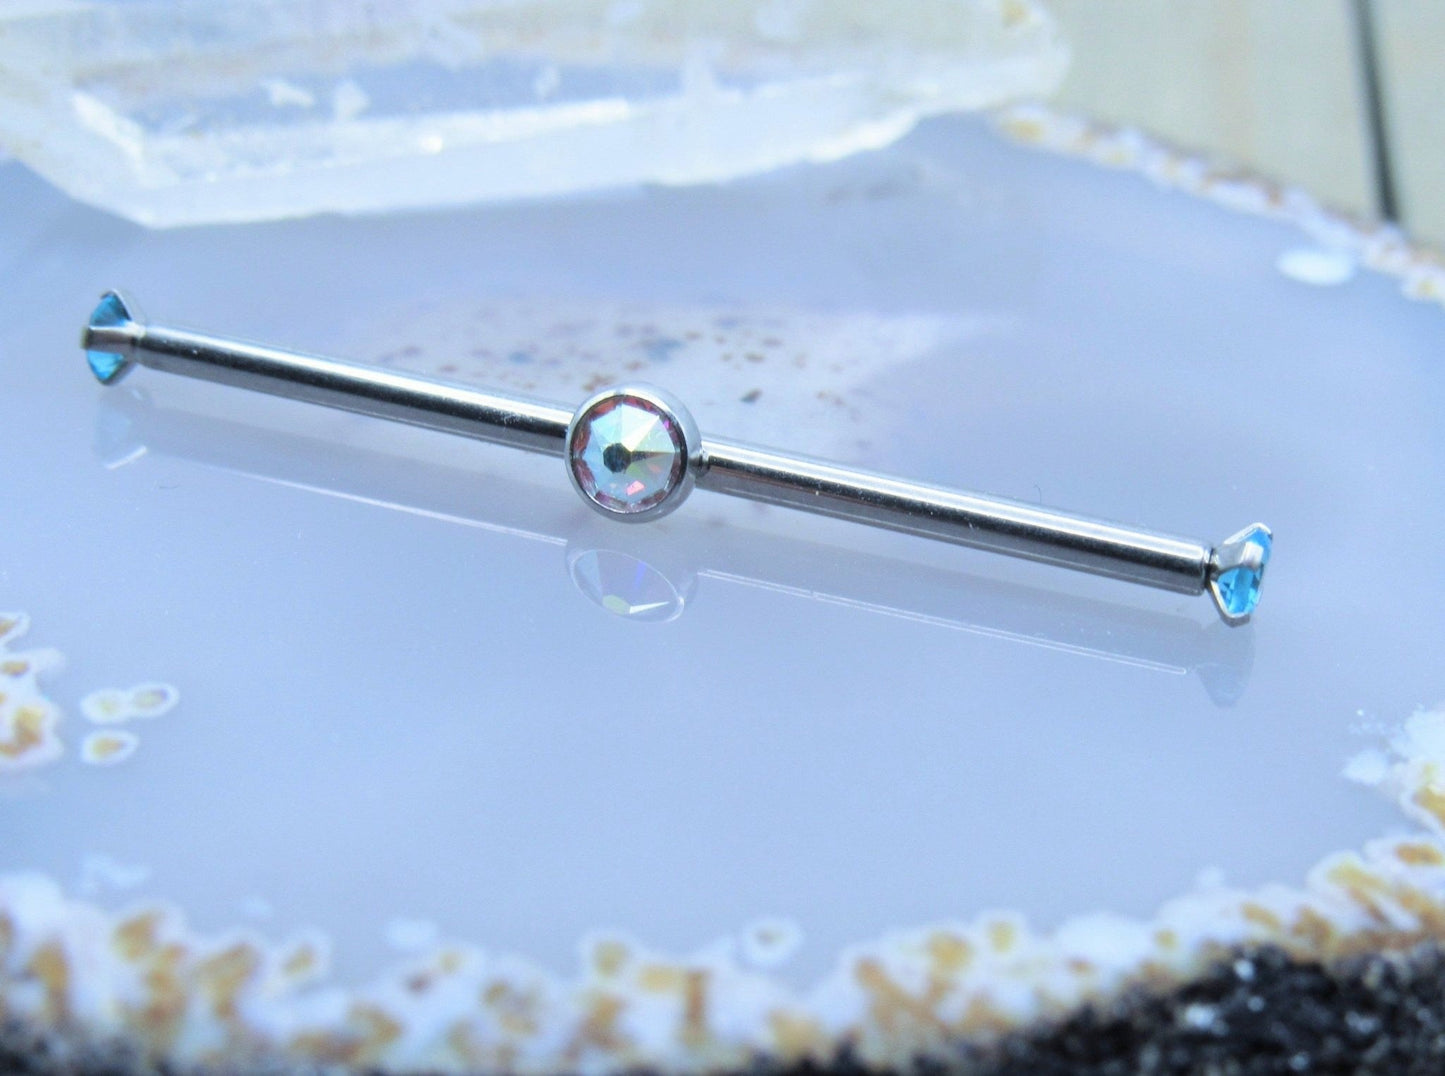 Gemstone industrial piercing barbell 14g internally threaded titanium scaffold body jewelry aurora borealis light blue cz stones - Siren Body Jewelry